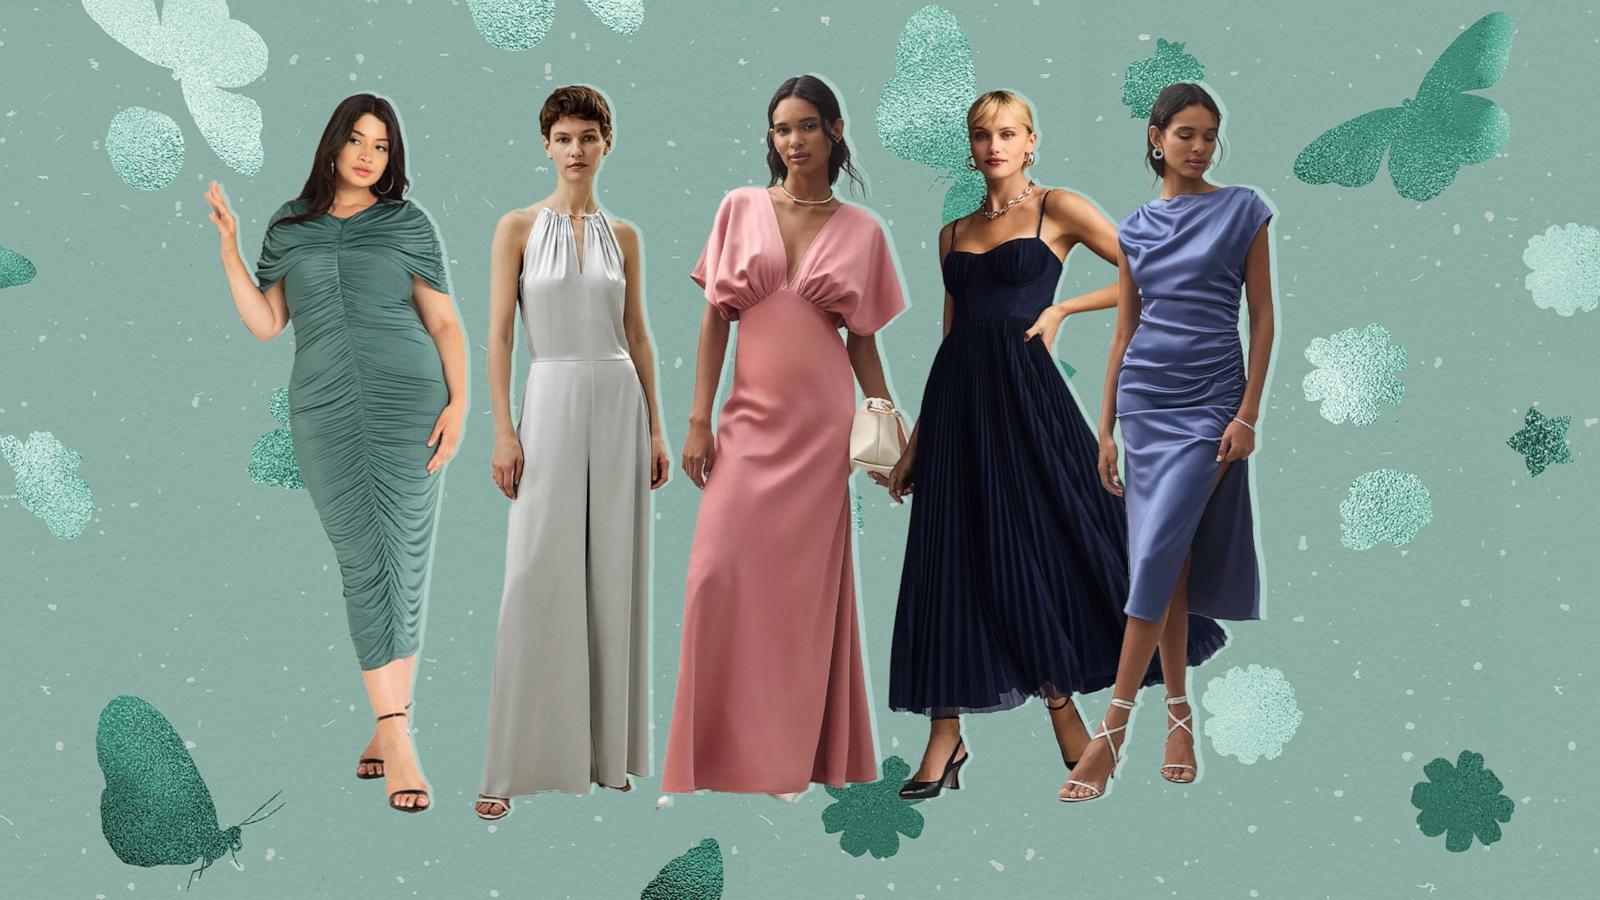 Buy La Zoire Western Dresses for Women's | Stylish Frock Long Length |  Georgette Maxi Dress with Belt (Maroon_LZA528-430-MR.S) at Amazon.in